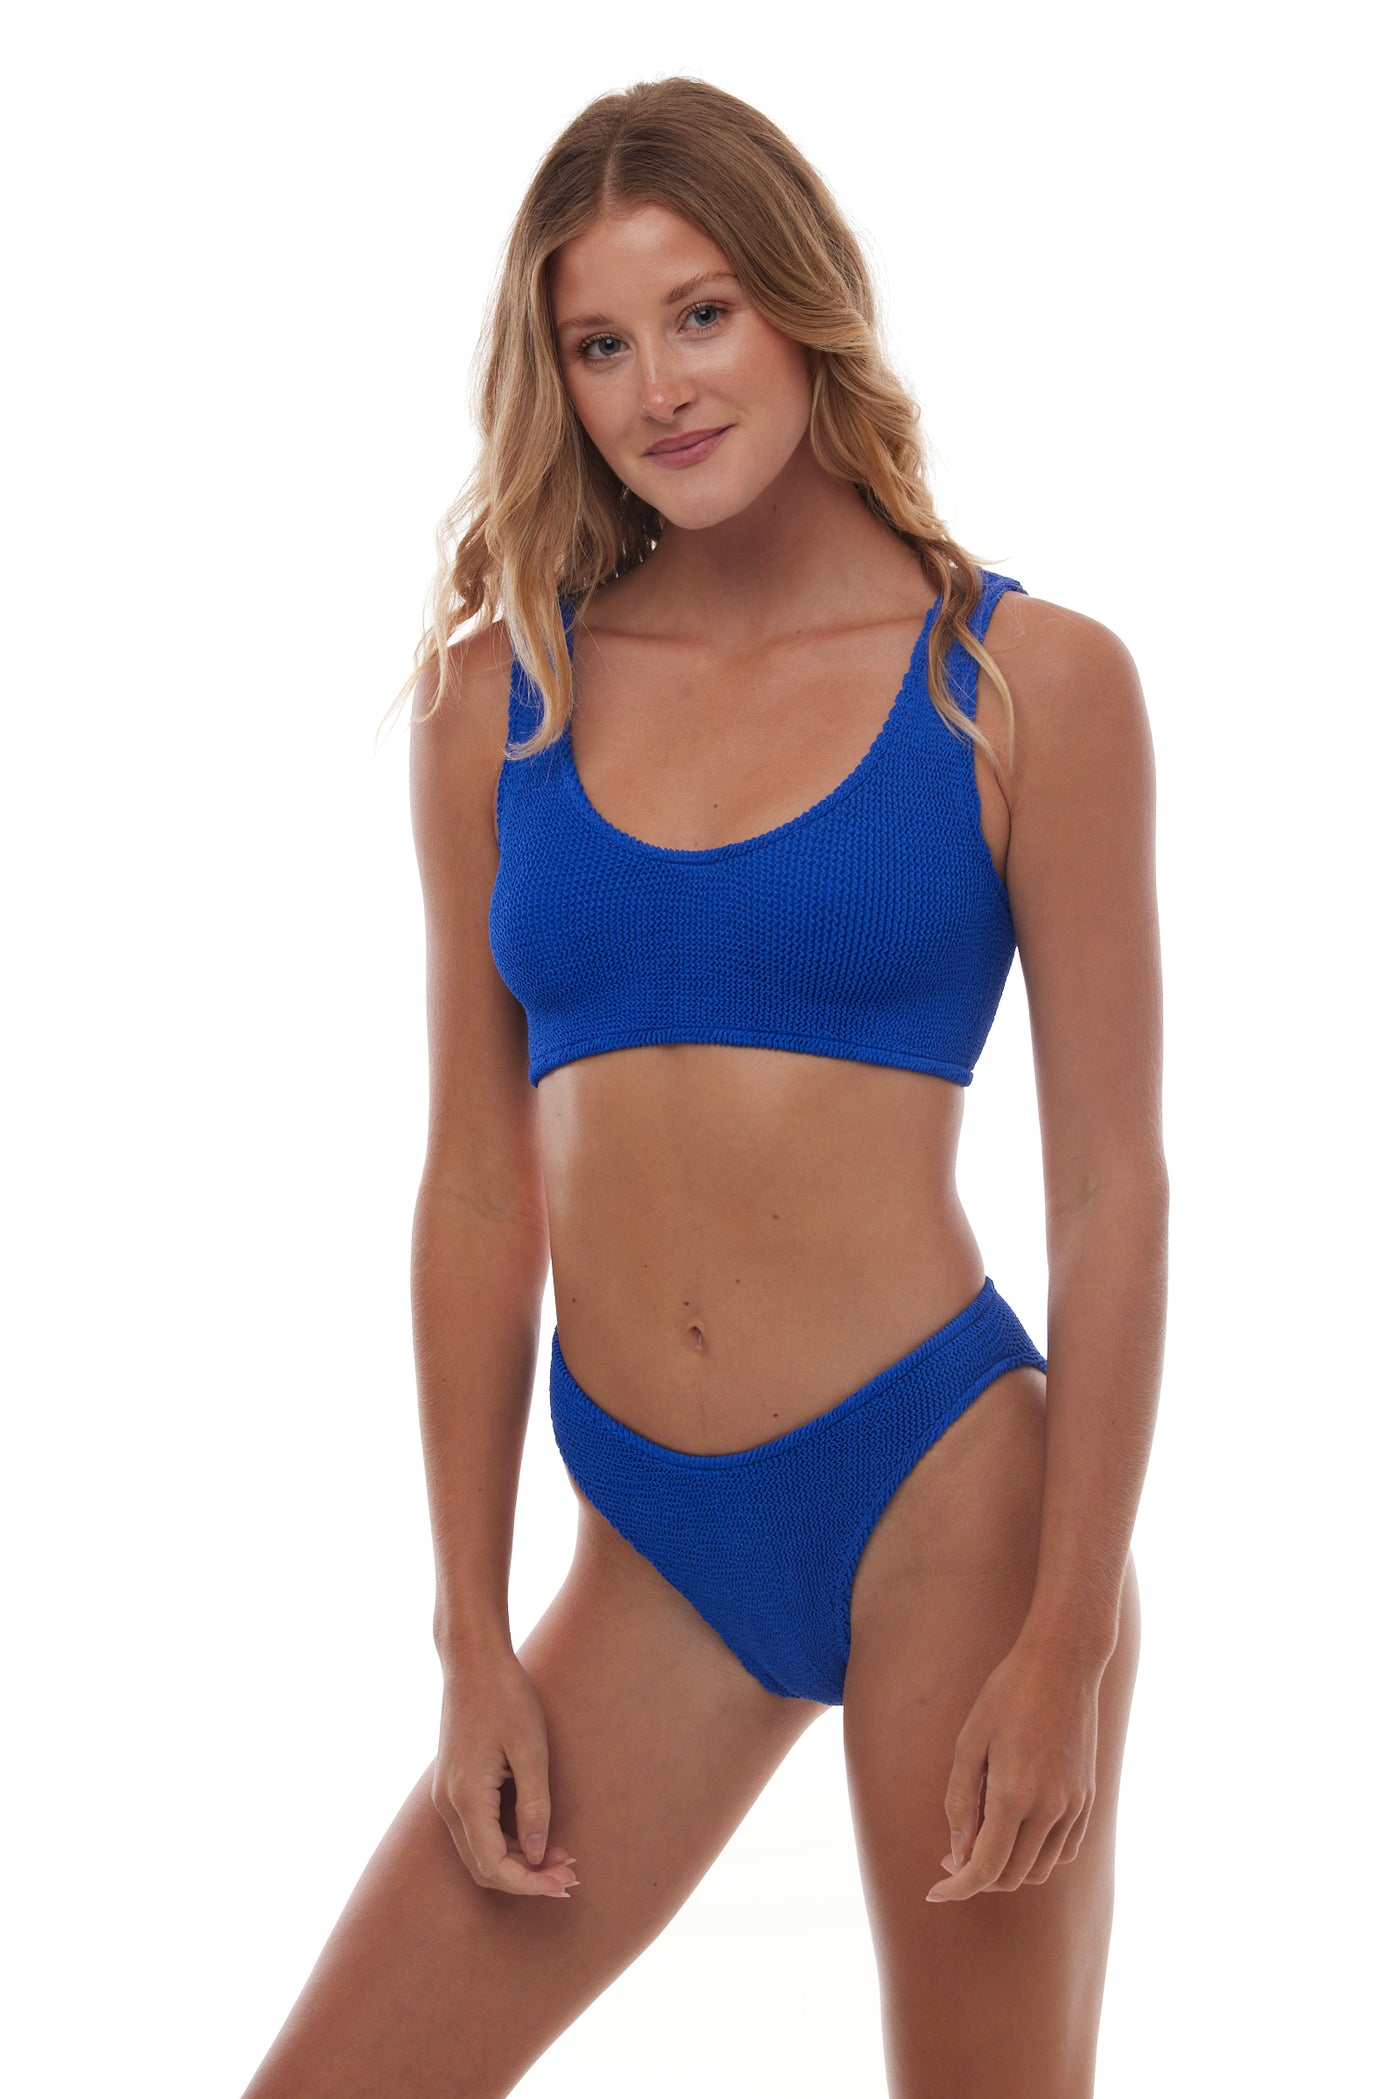 Cancun Classic Seamless One Size Bikini TOP ONLY (Royal Blue)